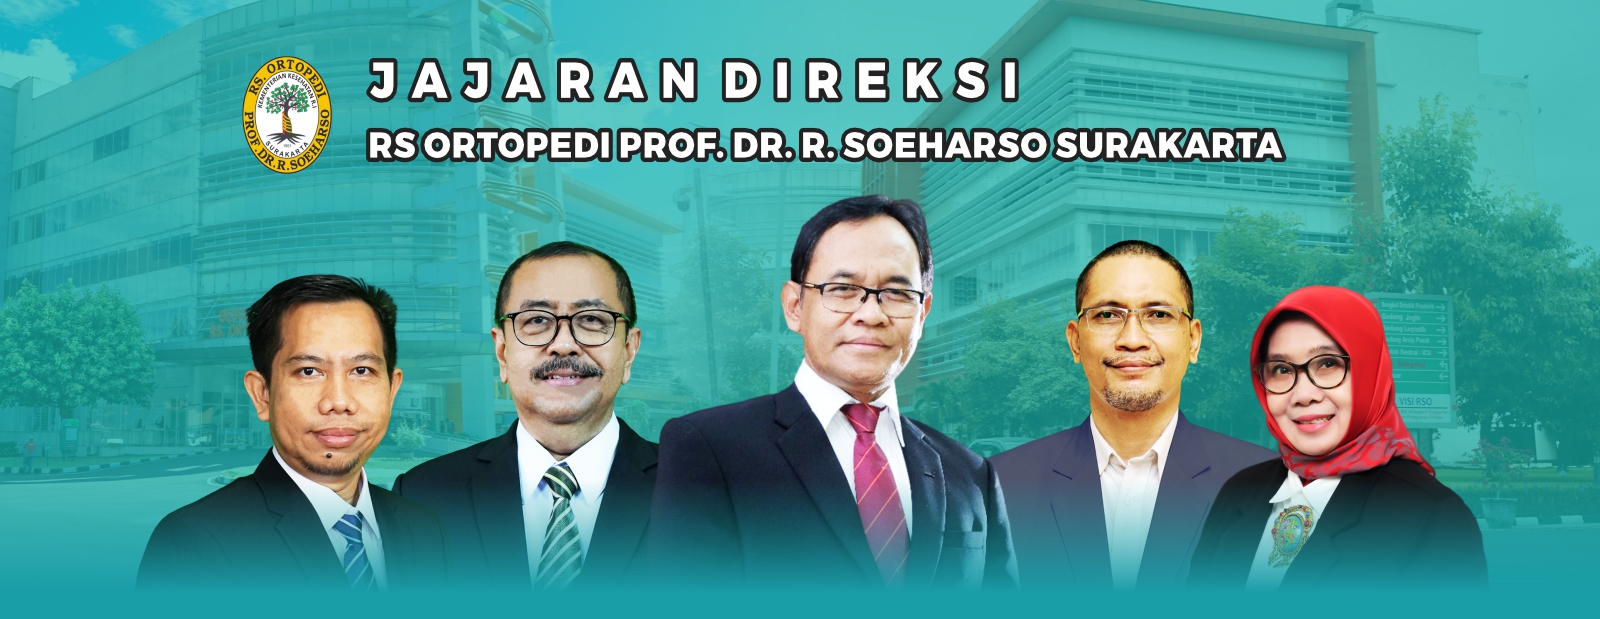 Rumah Sakit Ortopedi Prof. Dr. R. Soeharso Surakarta Header 3